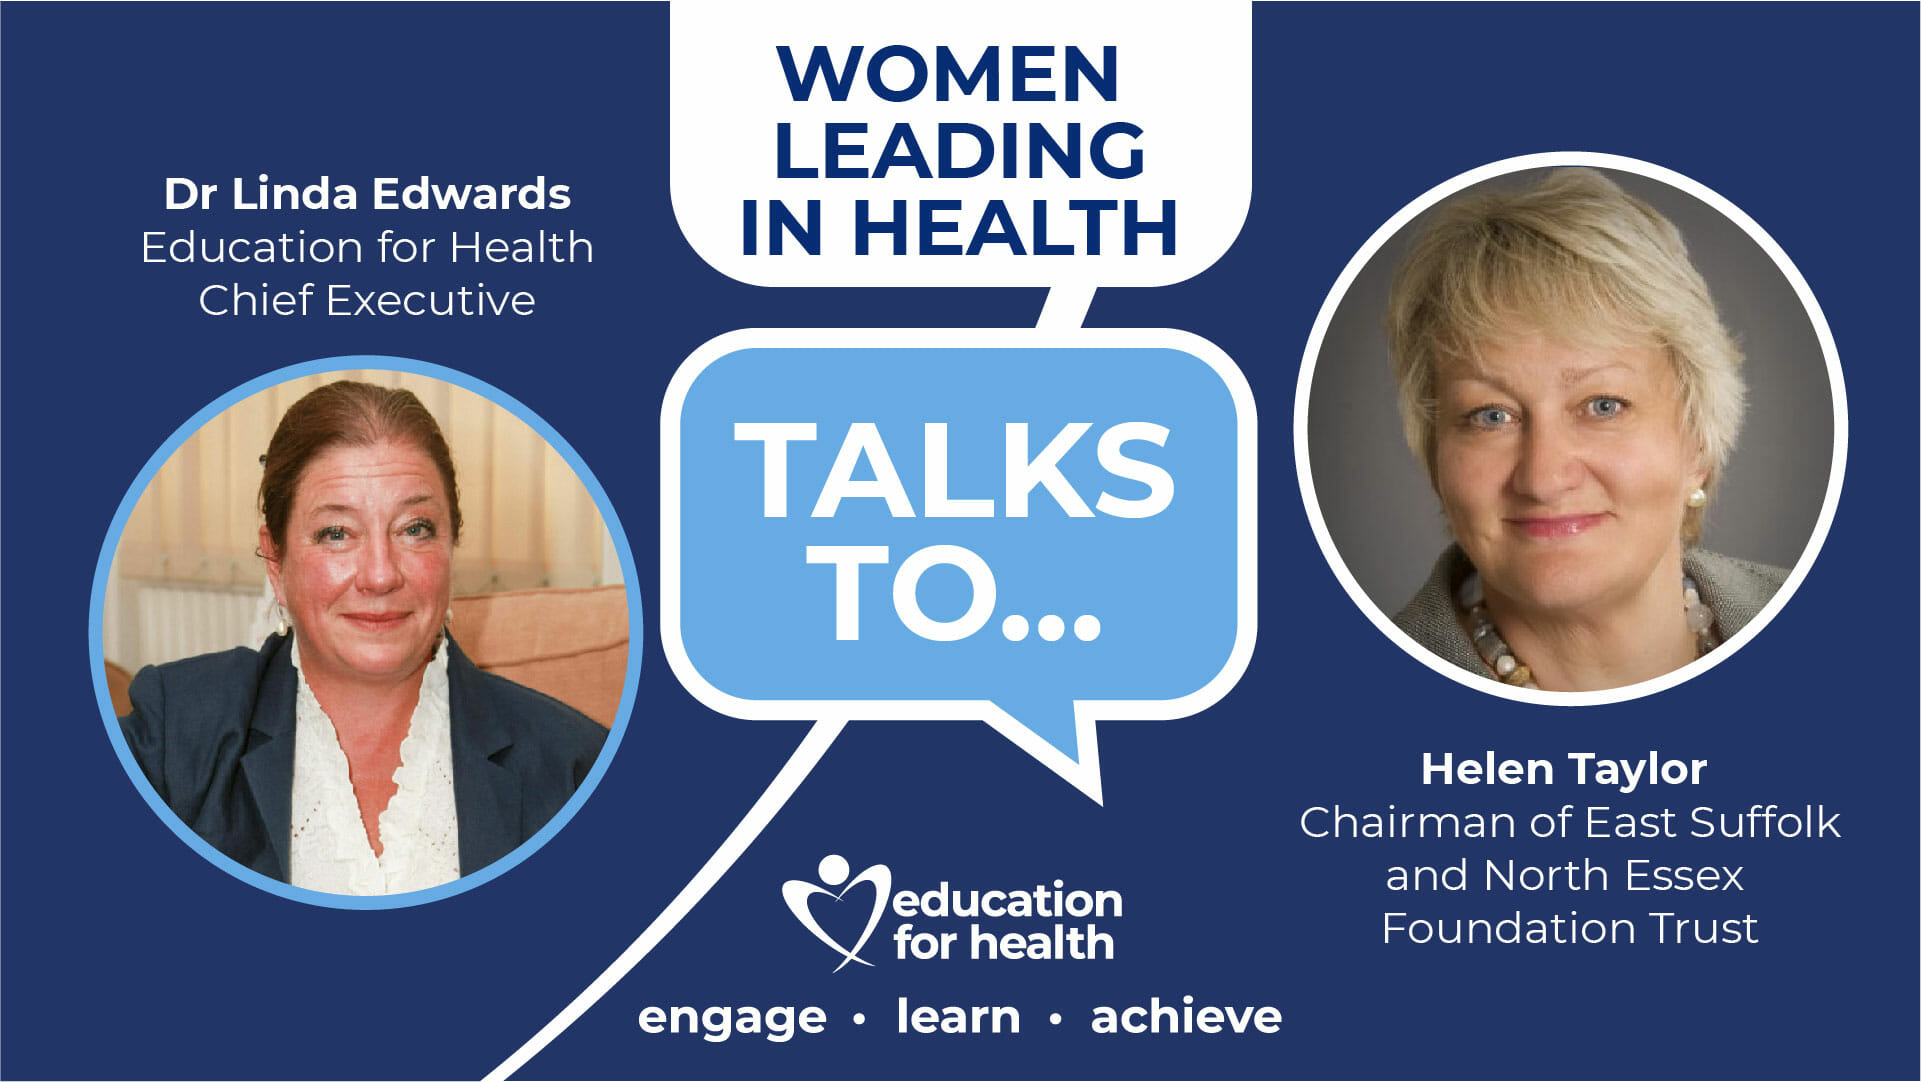 Women leading in health The Chairman - Helen Taylor 
Chairman of East Suffolkand North Essex Foundation Trust